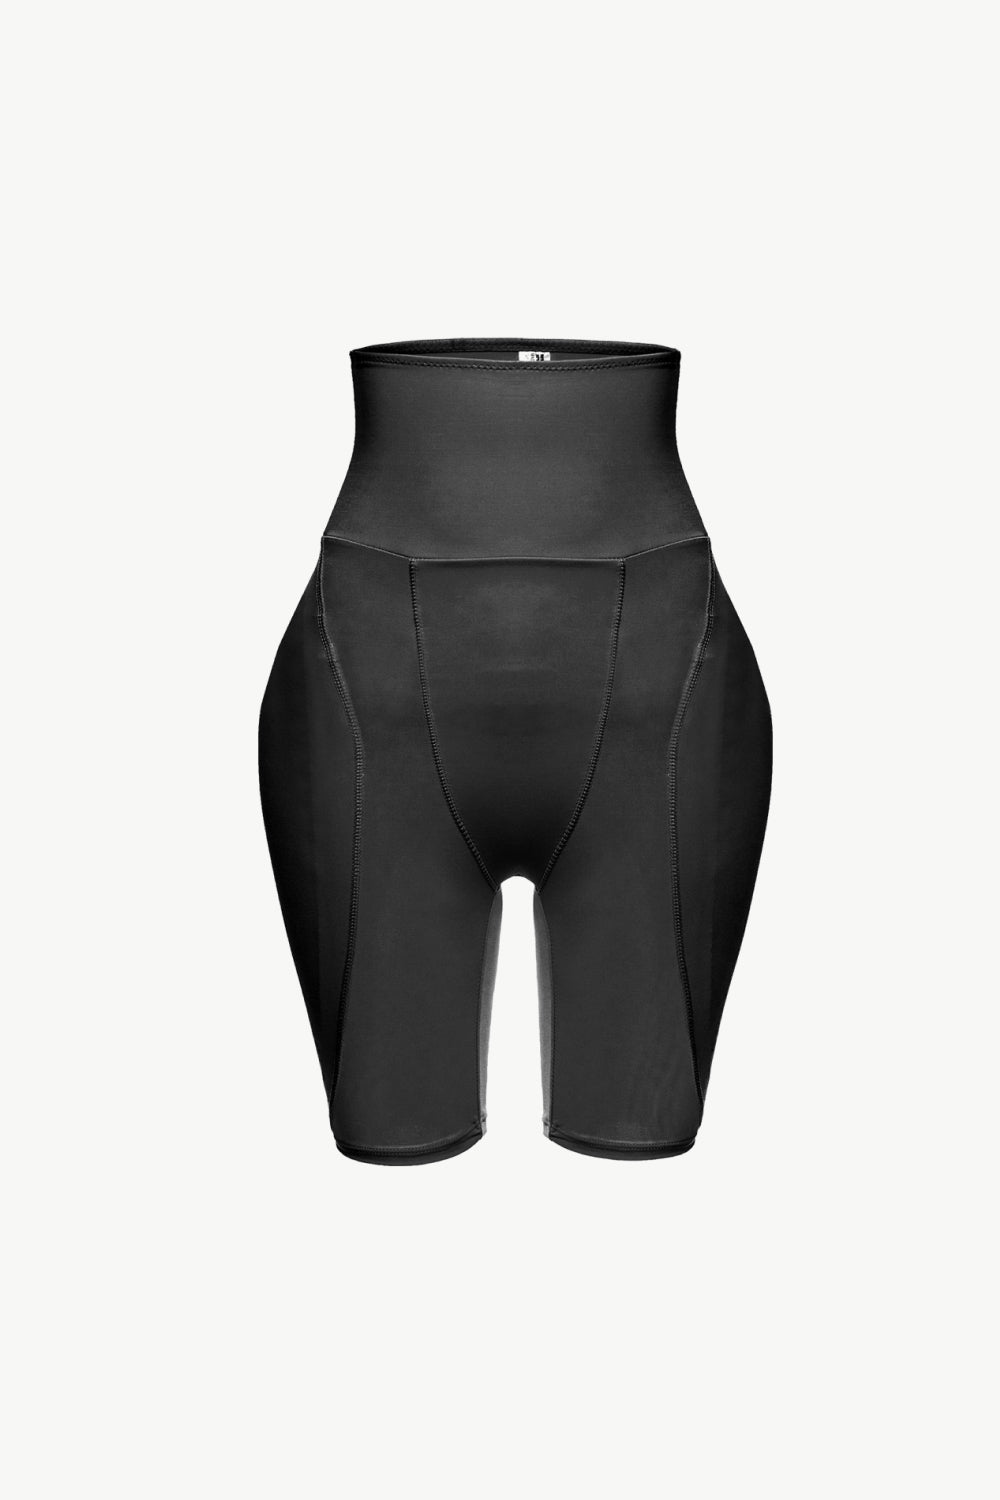 Dark Slate Gray Full Size High Waisted Pull-On Shaping Shorts